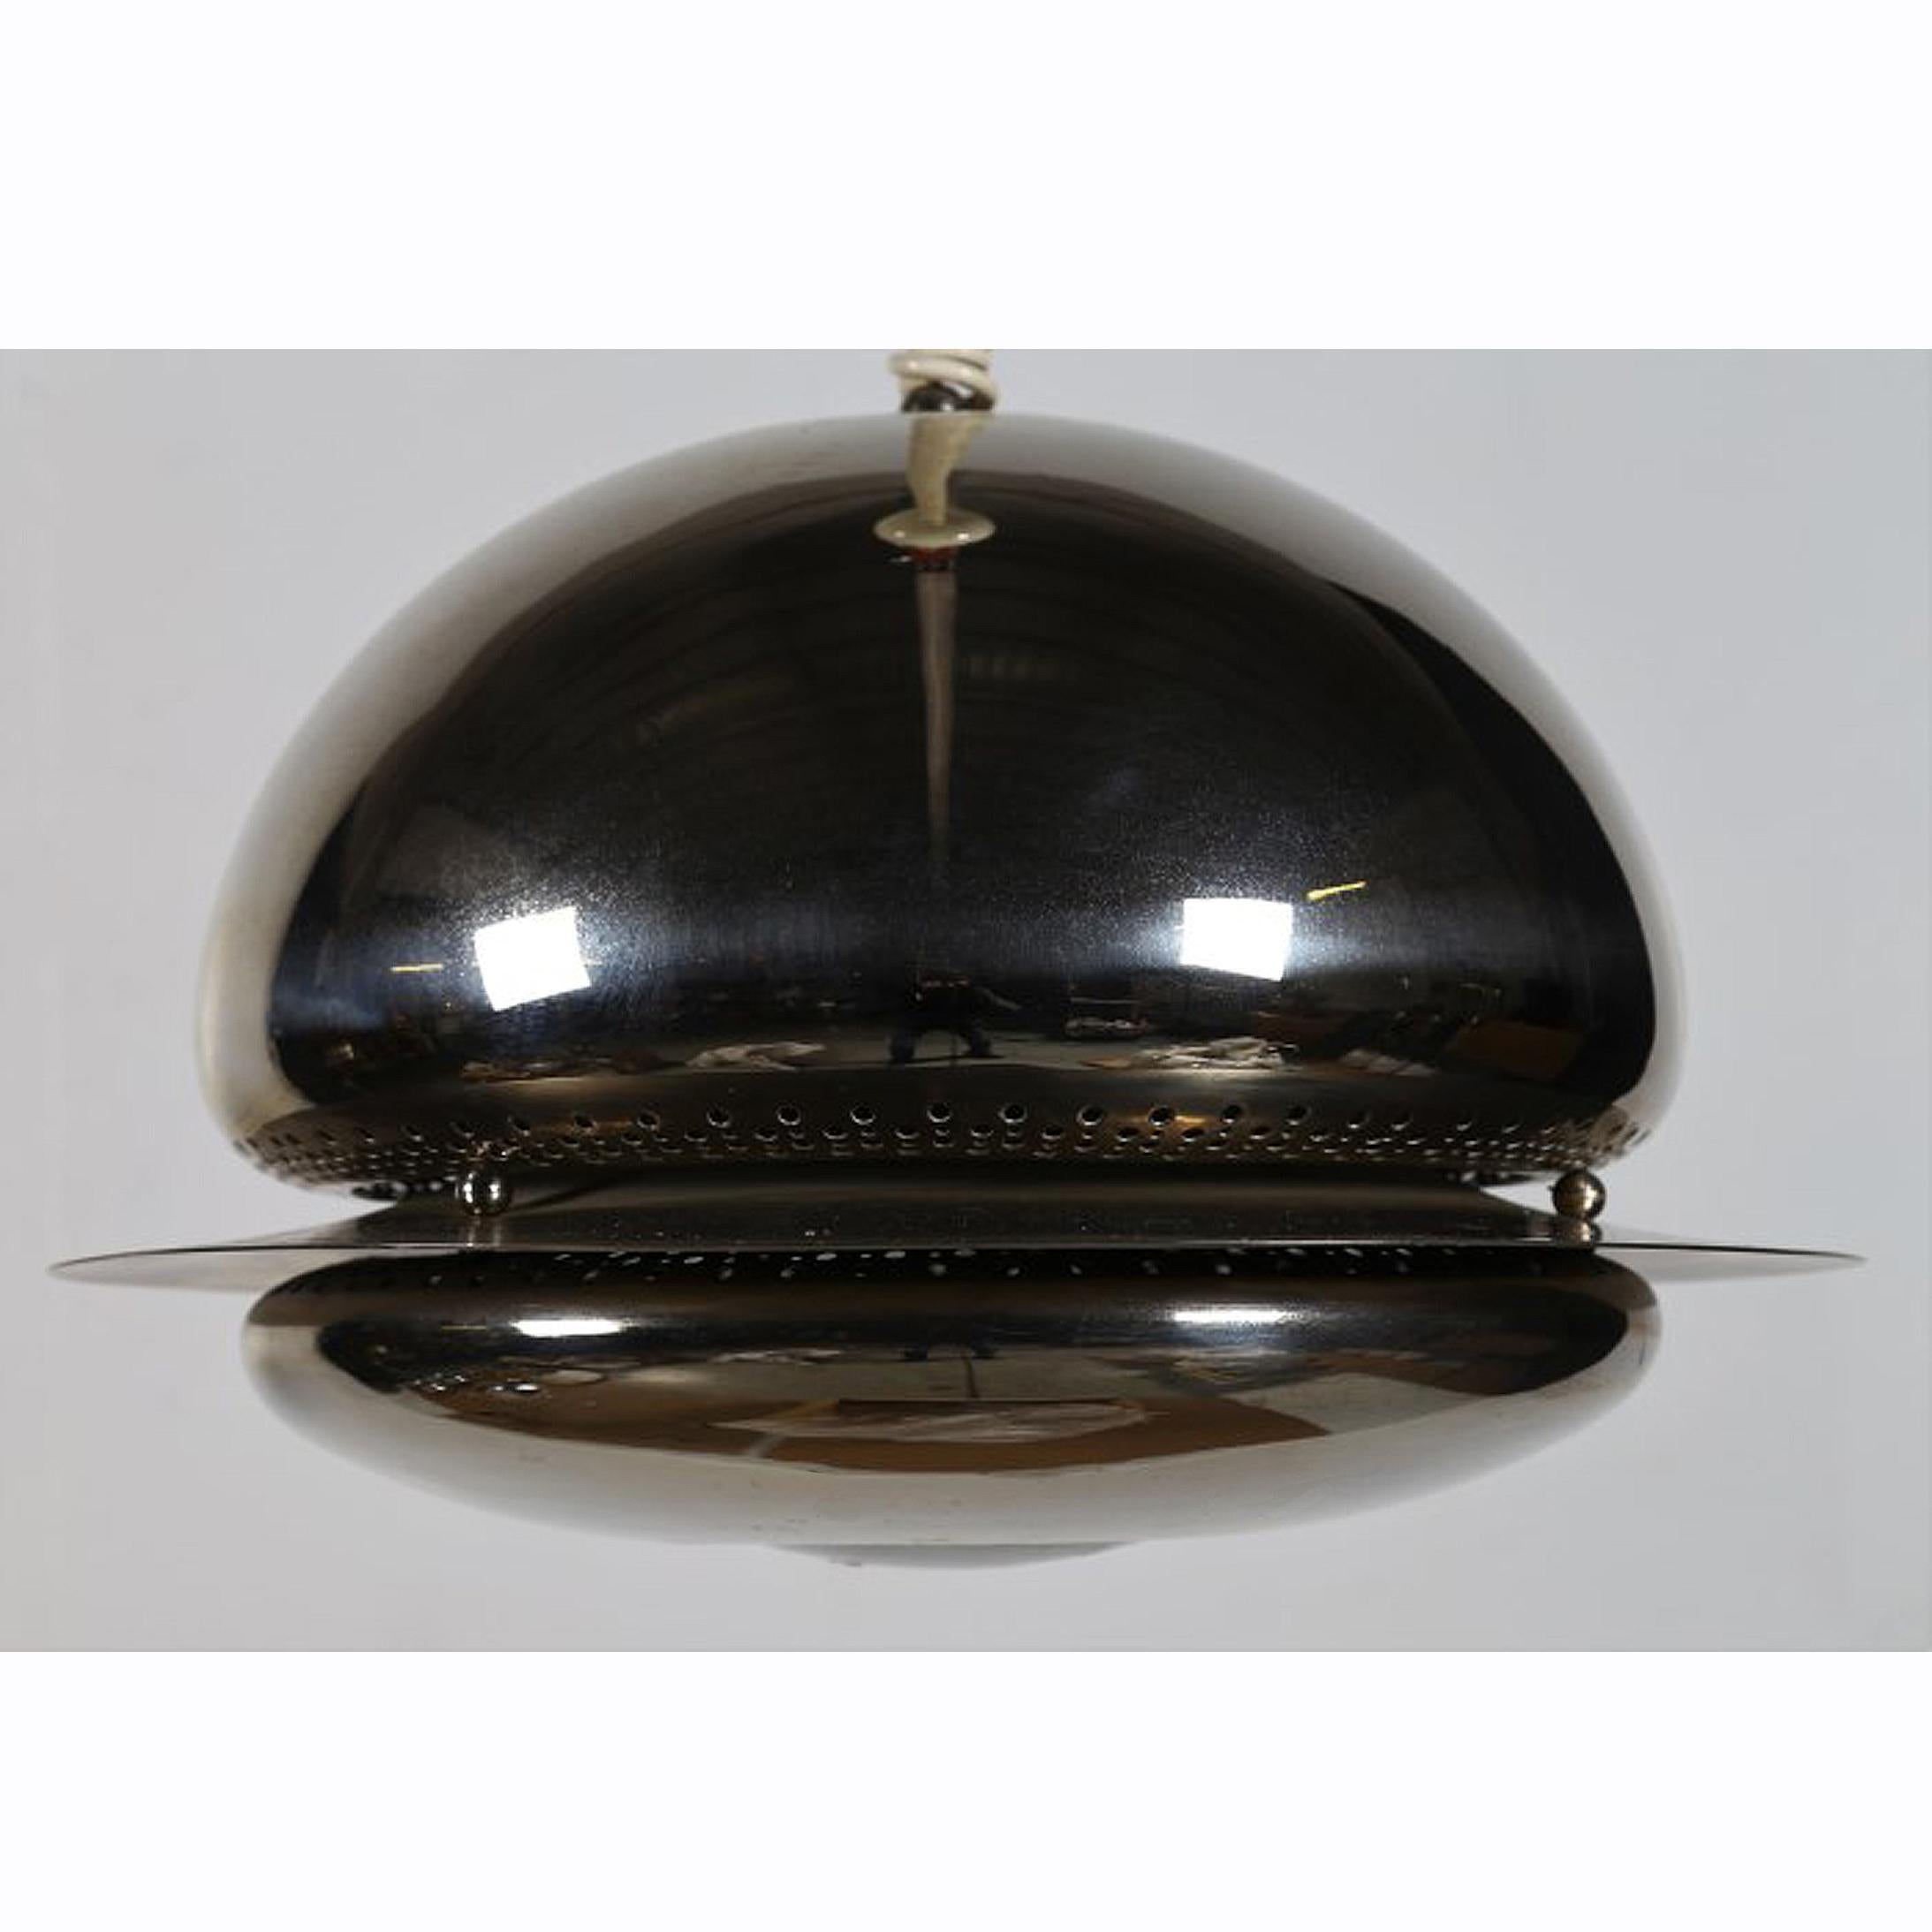 A spherical brass pendant light.
Manufactured by Flos.
Italy.
1960s.

Literature
Domus 395, October 1962, p.48

Ottagono 1, April 1966, p. 91

Giuliana Gramigna, Repertorio 1950-2000, Allemandi, Torino 2003, p.90.

Note
One pendant